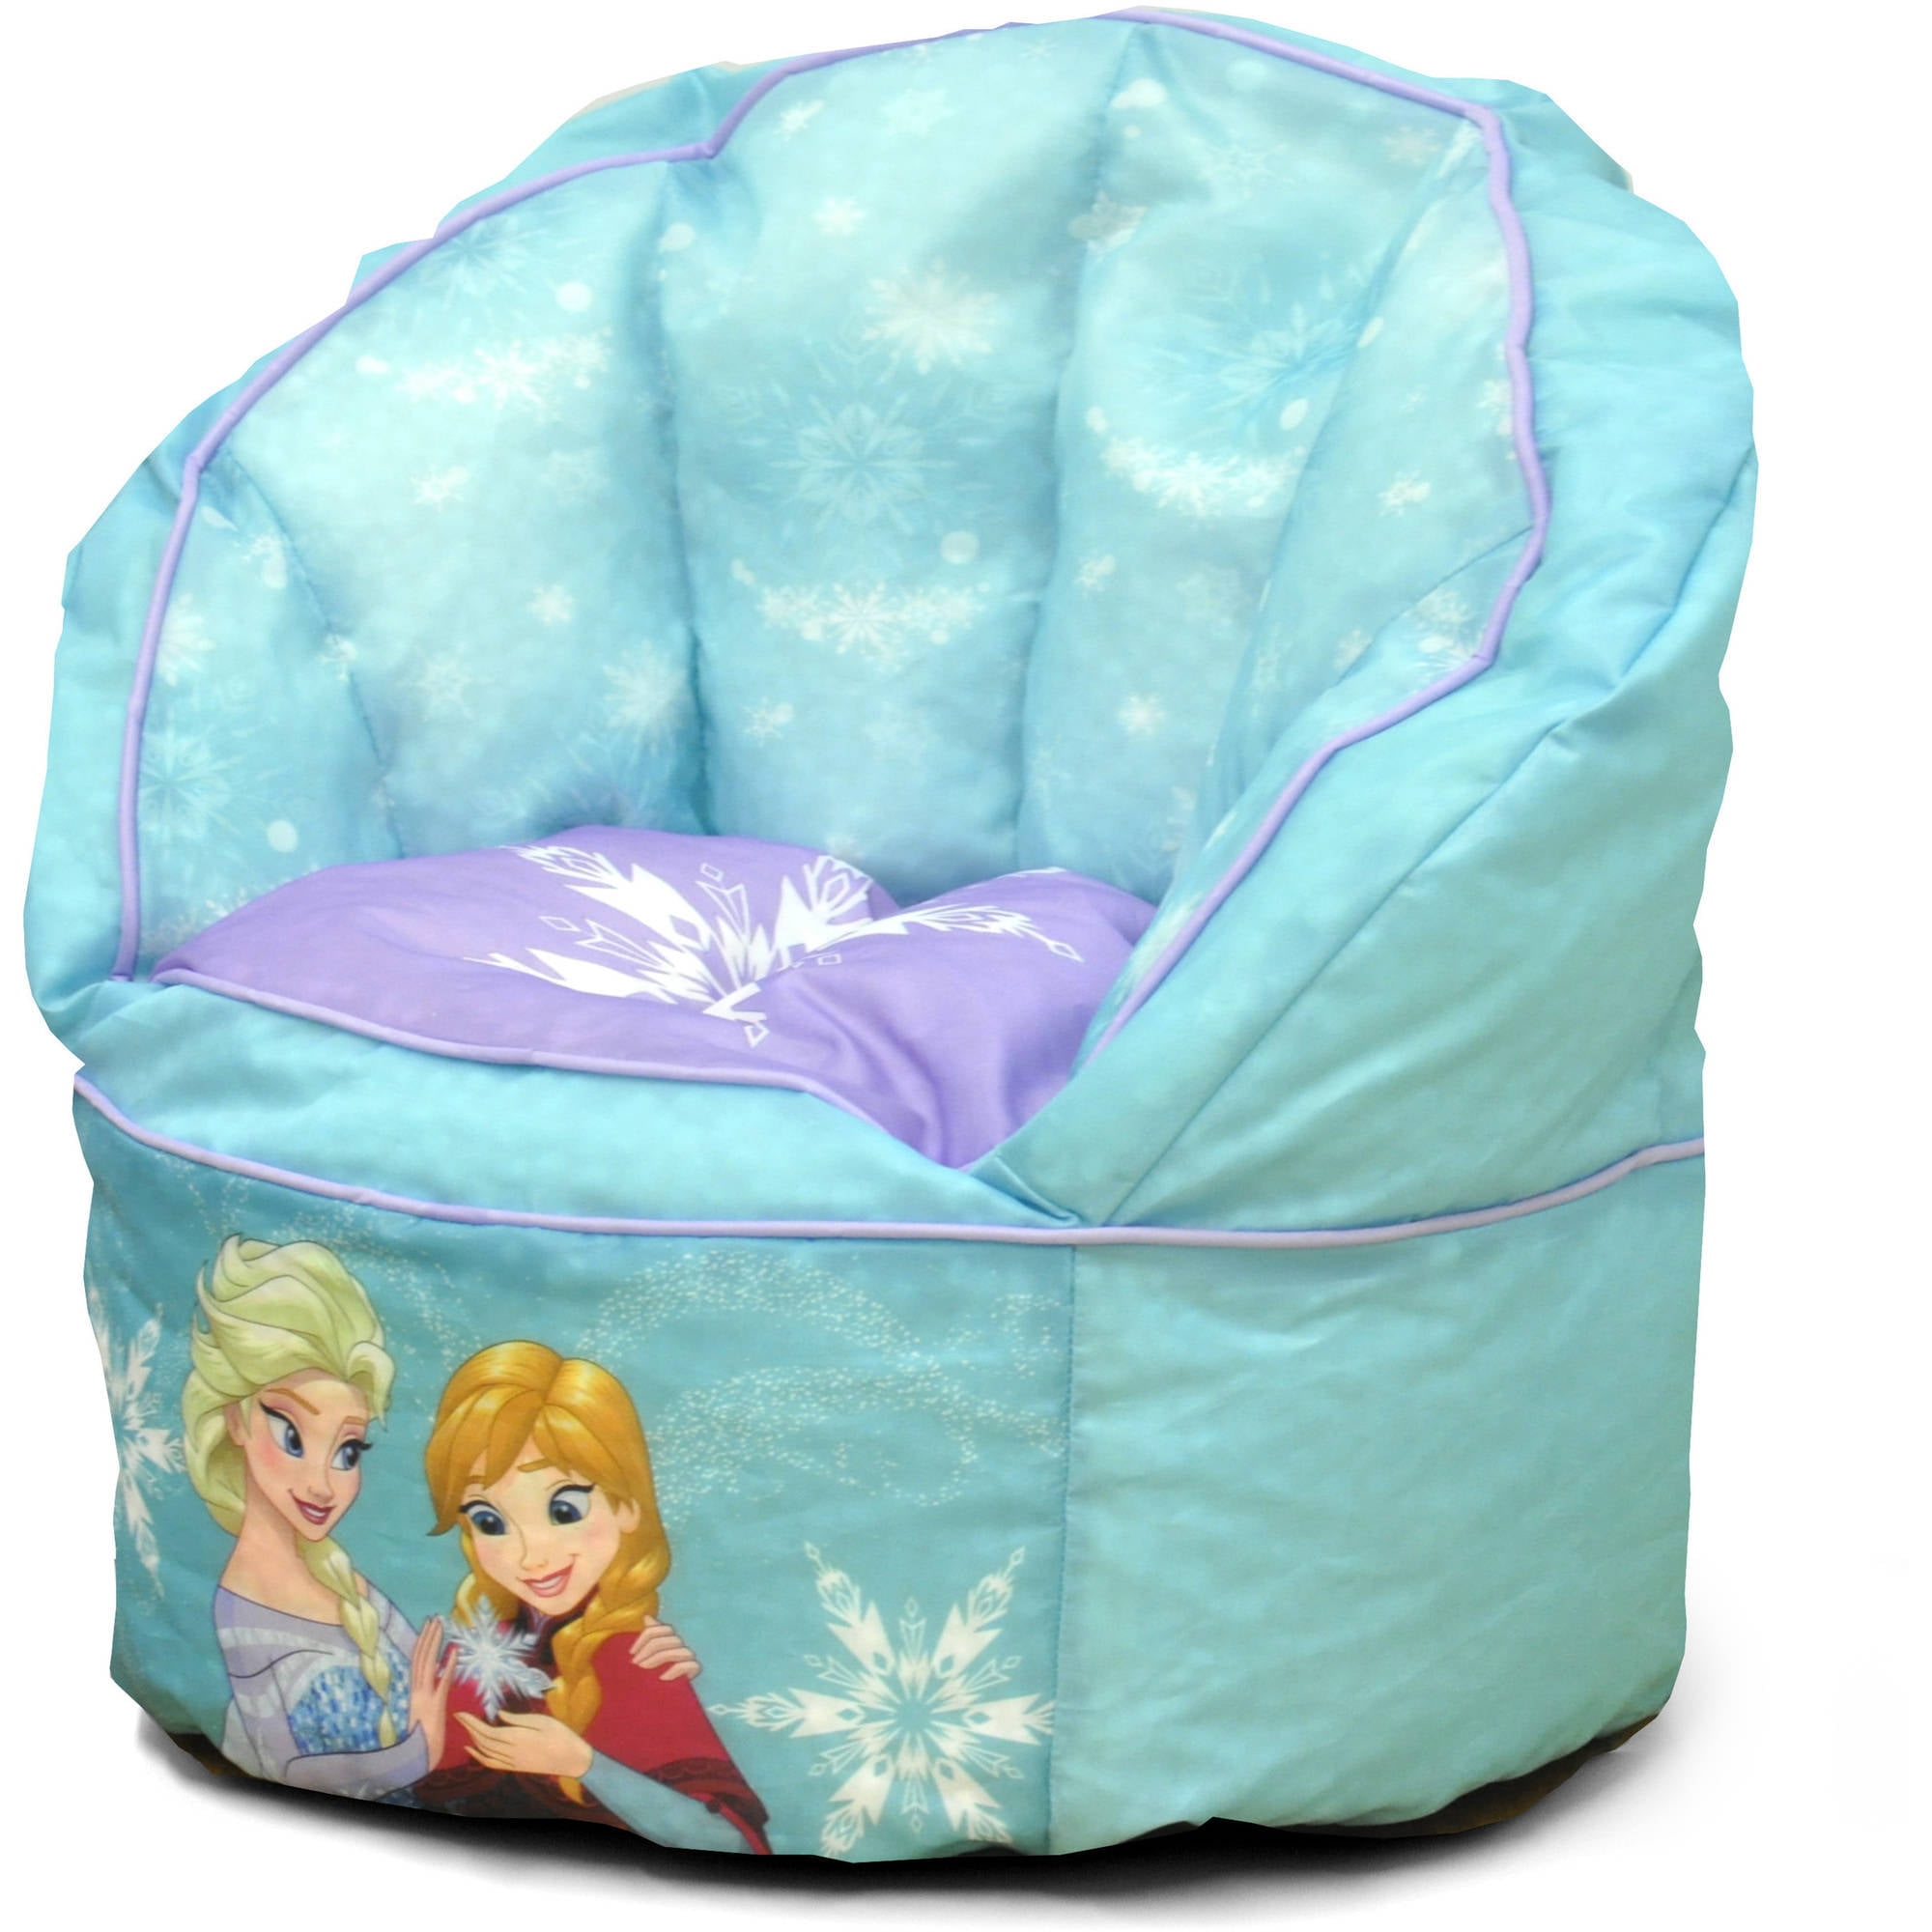 Disney Frozen Sofa Bean Bag Chair with Piping - Walmart ...